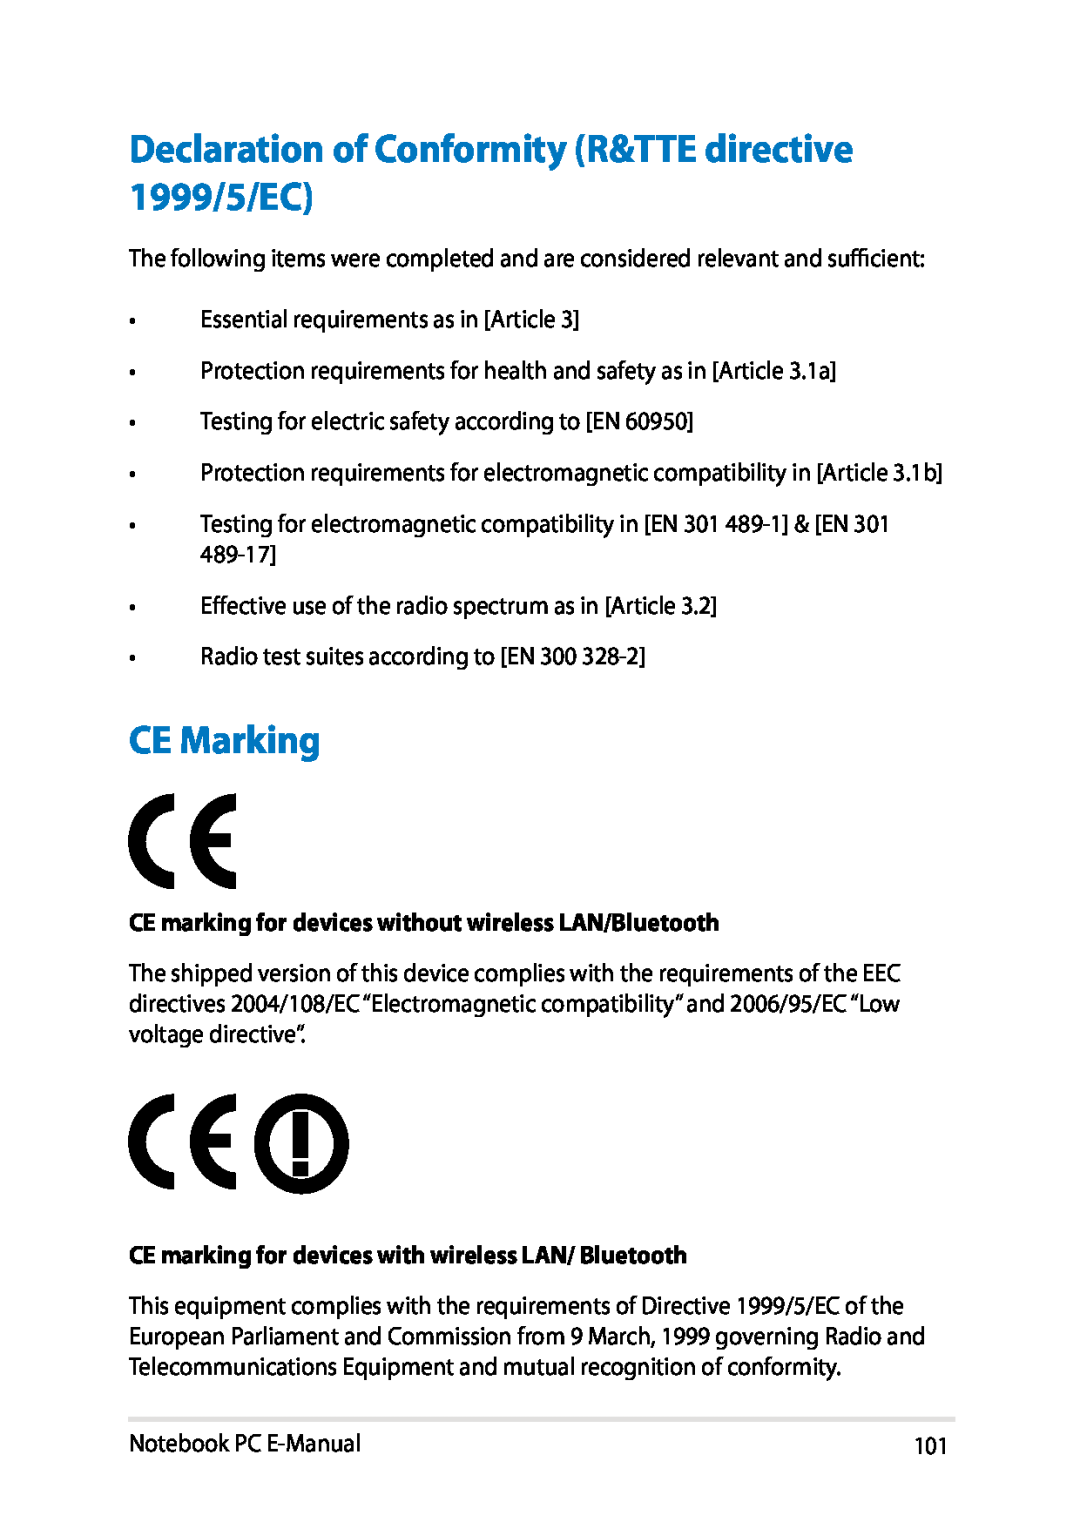 Asus E8438 manual Declaration of Conformity R&TTE directive 1999/5/EC, CE Marking 